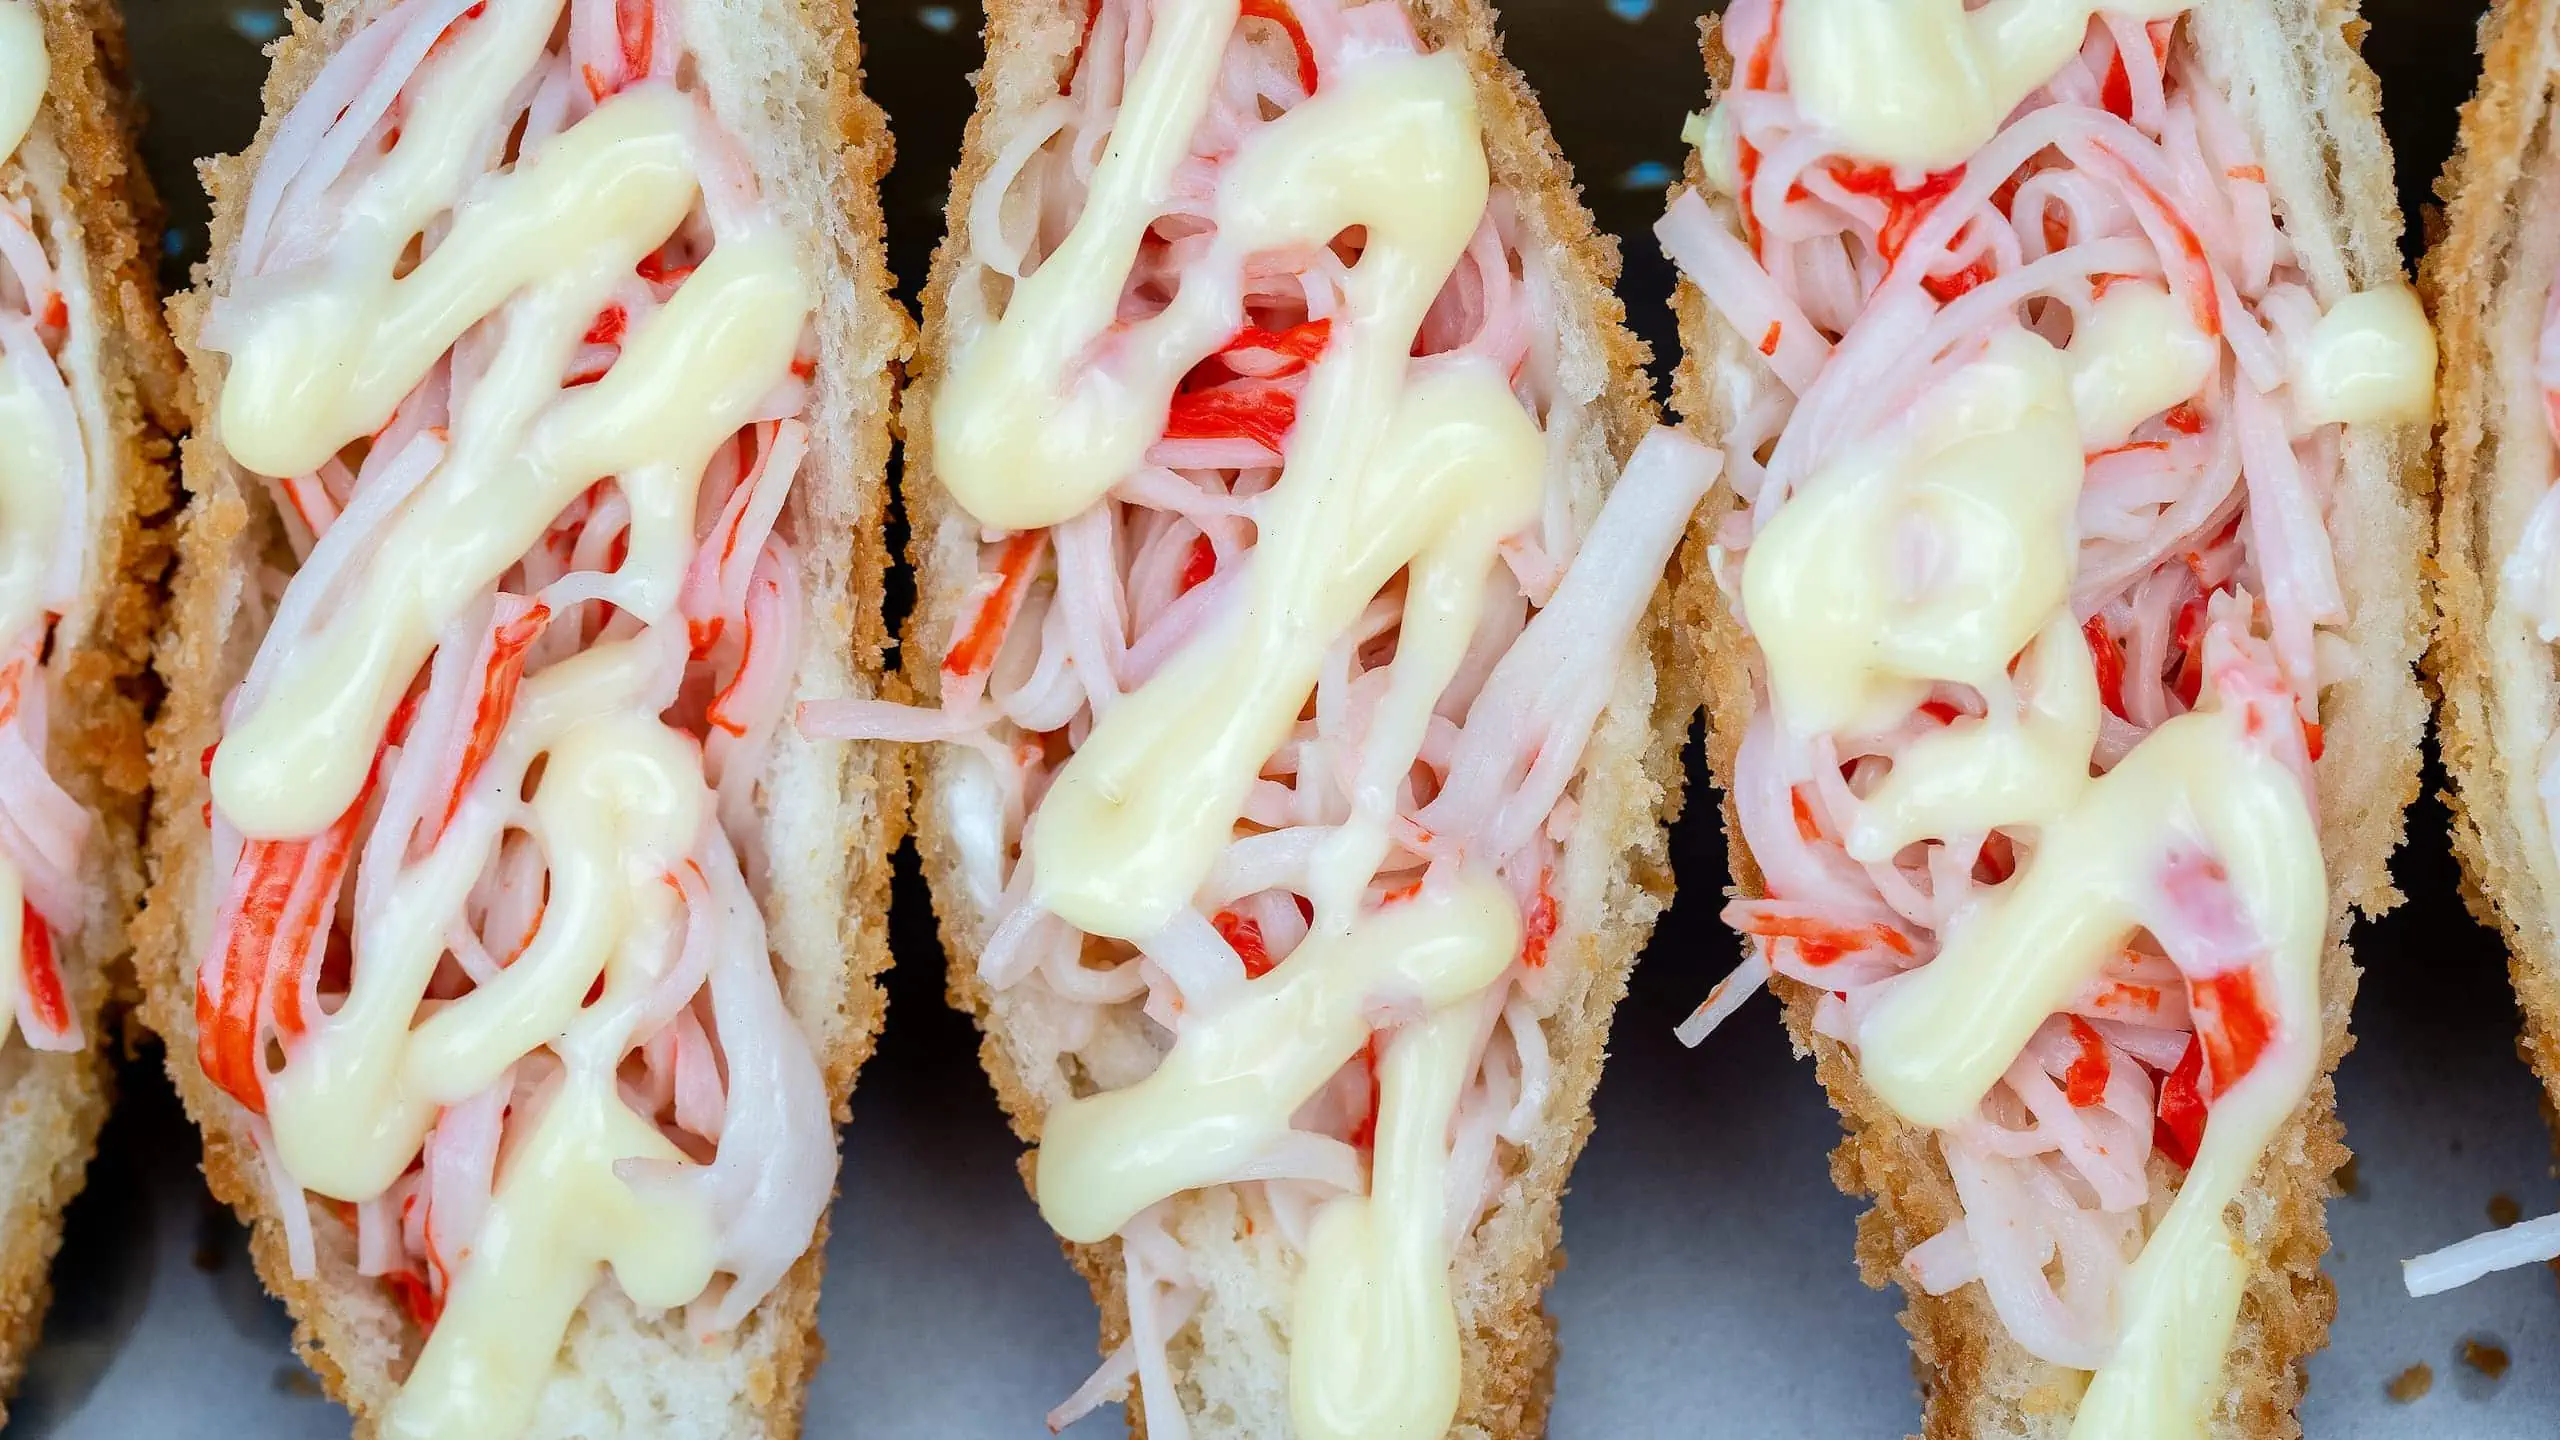 Subways' seafood sensation with mayo